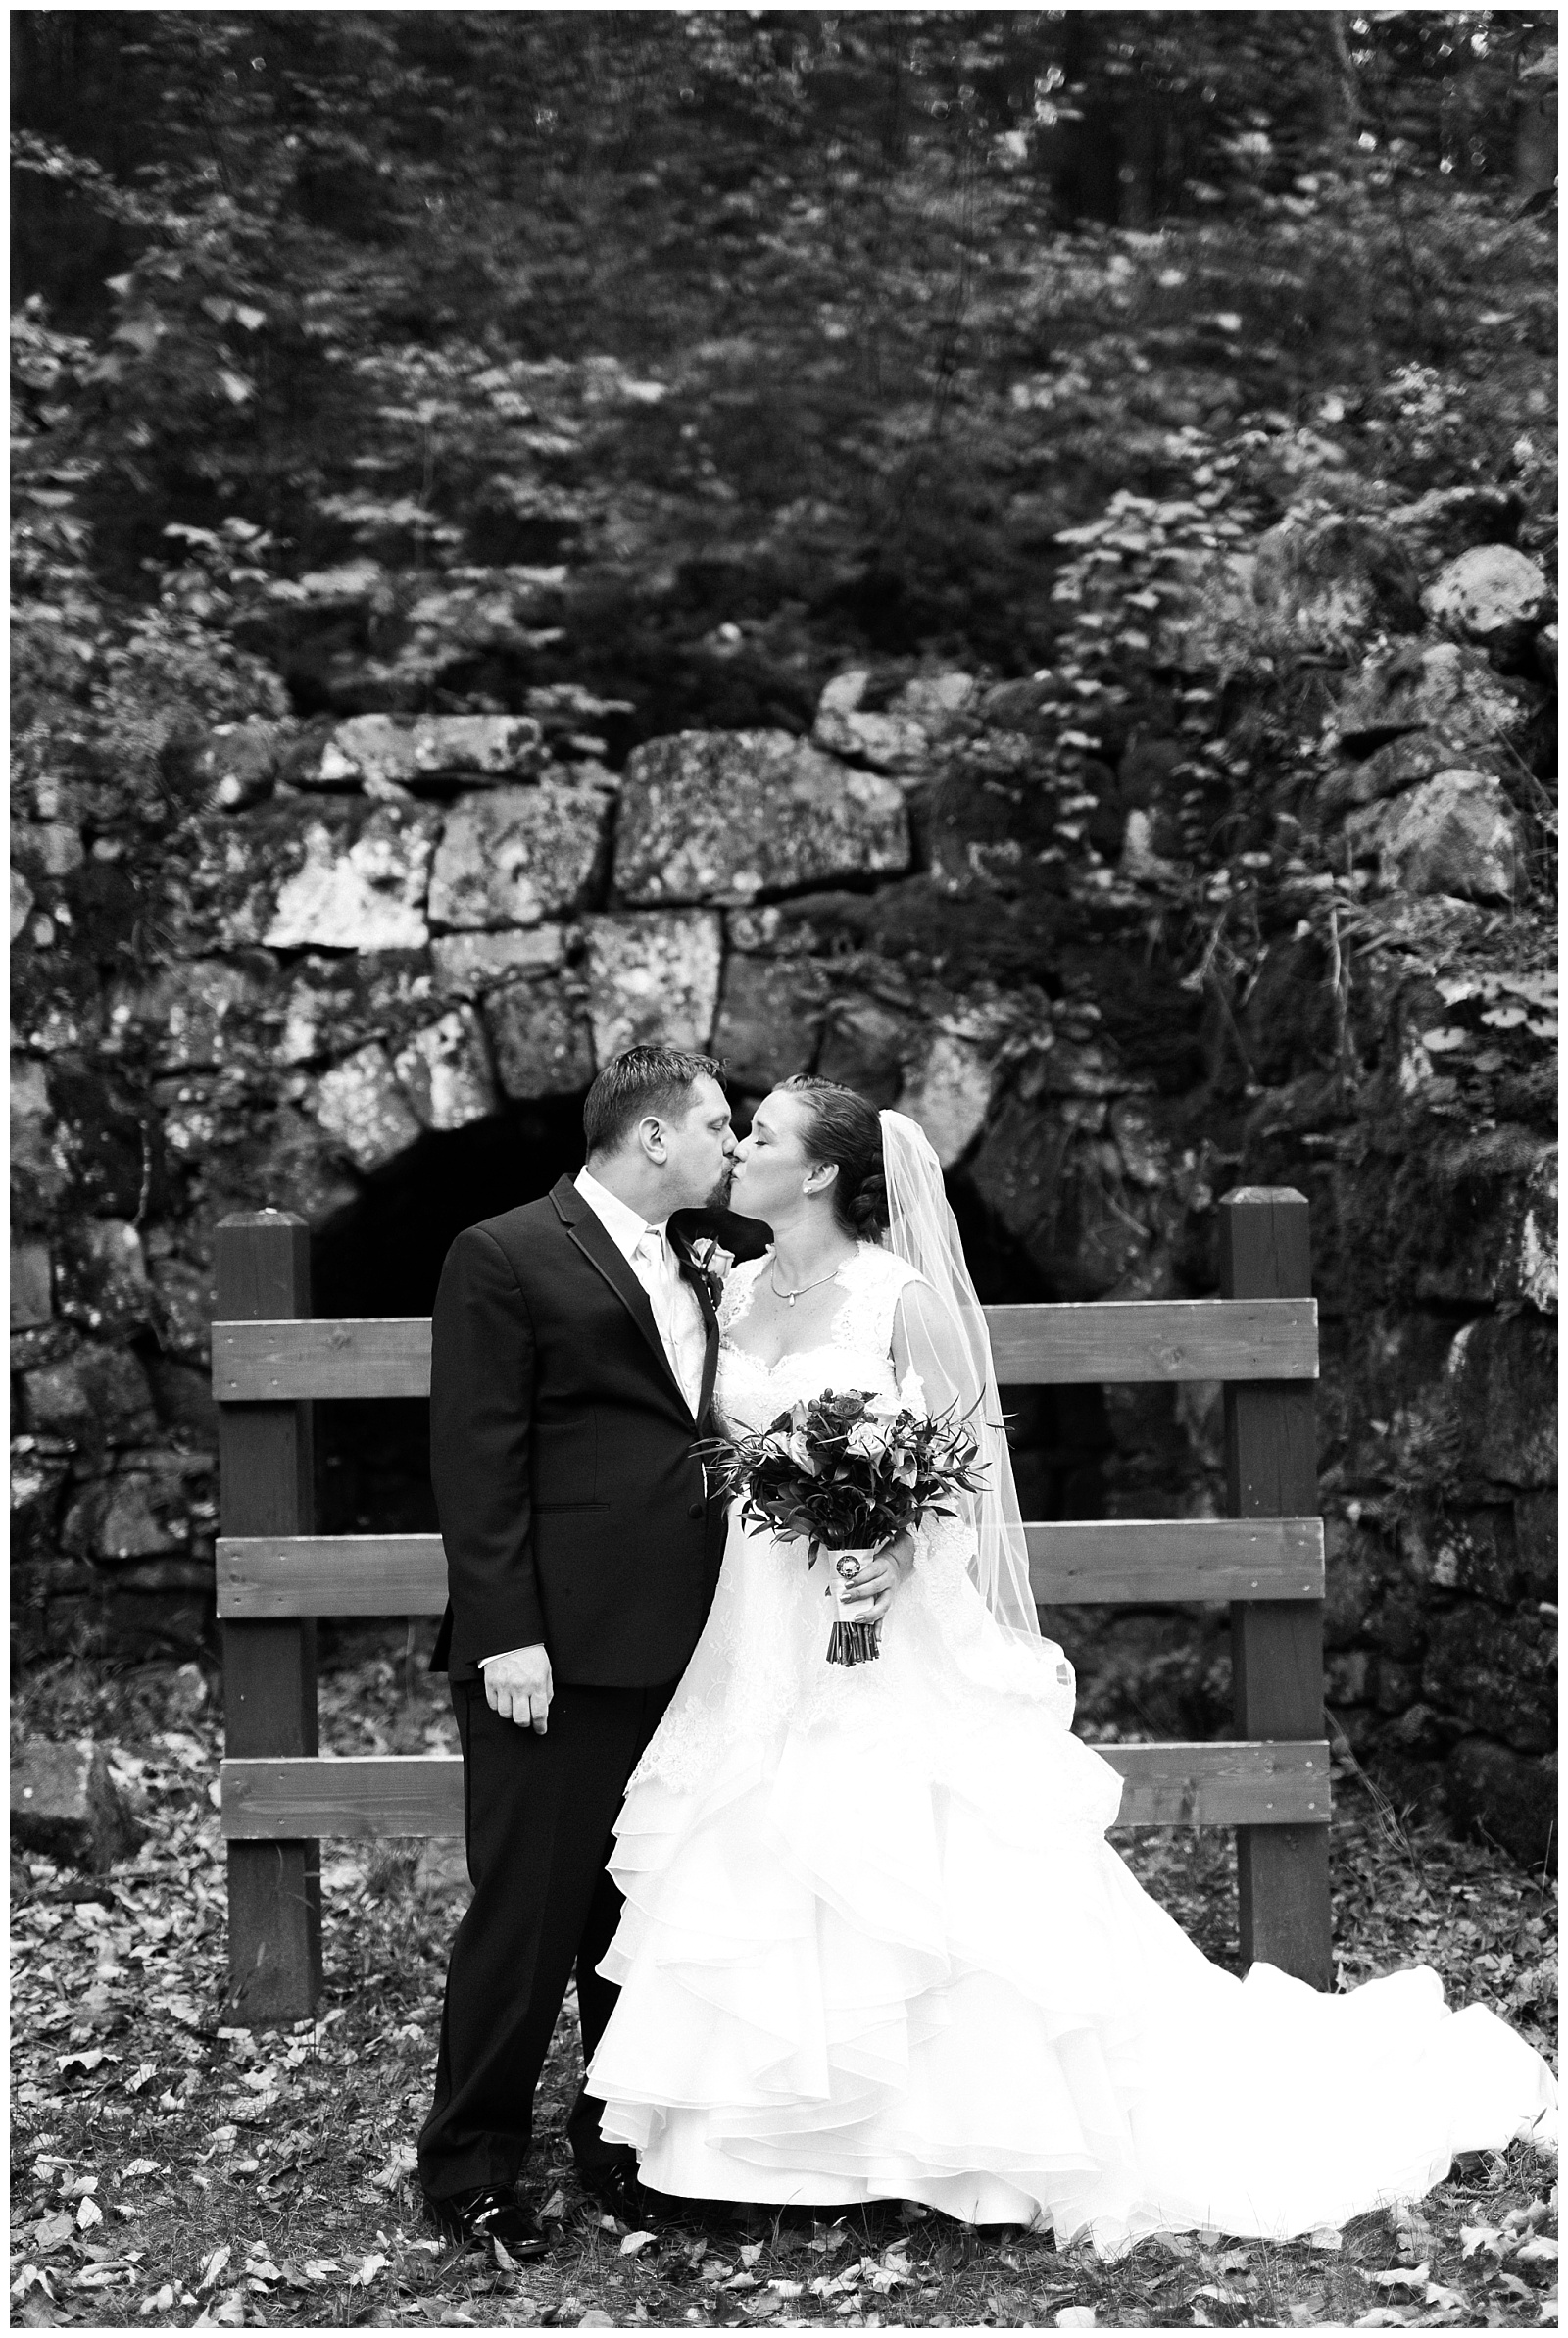 Autumn,Bride & Groom,David's Country Inn,Fall Wedding,Forest,Hackettstown,NJ Wedding Photographer,Woods,